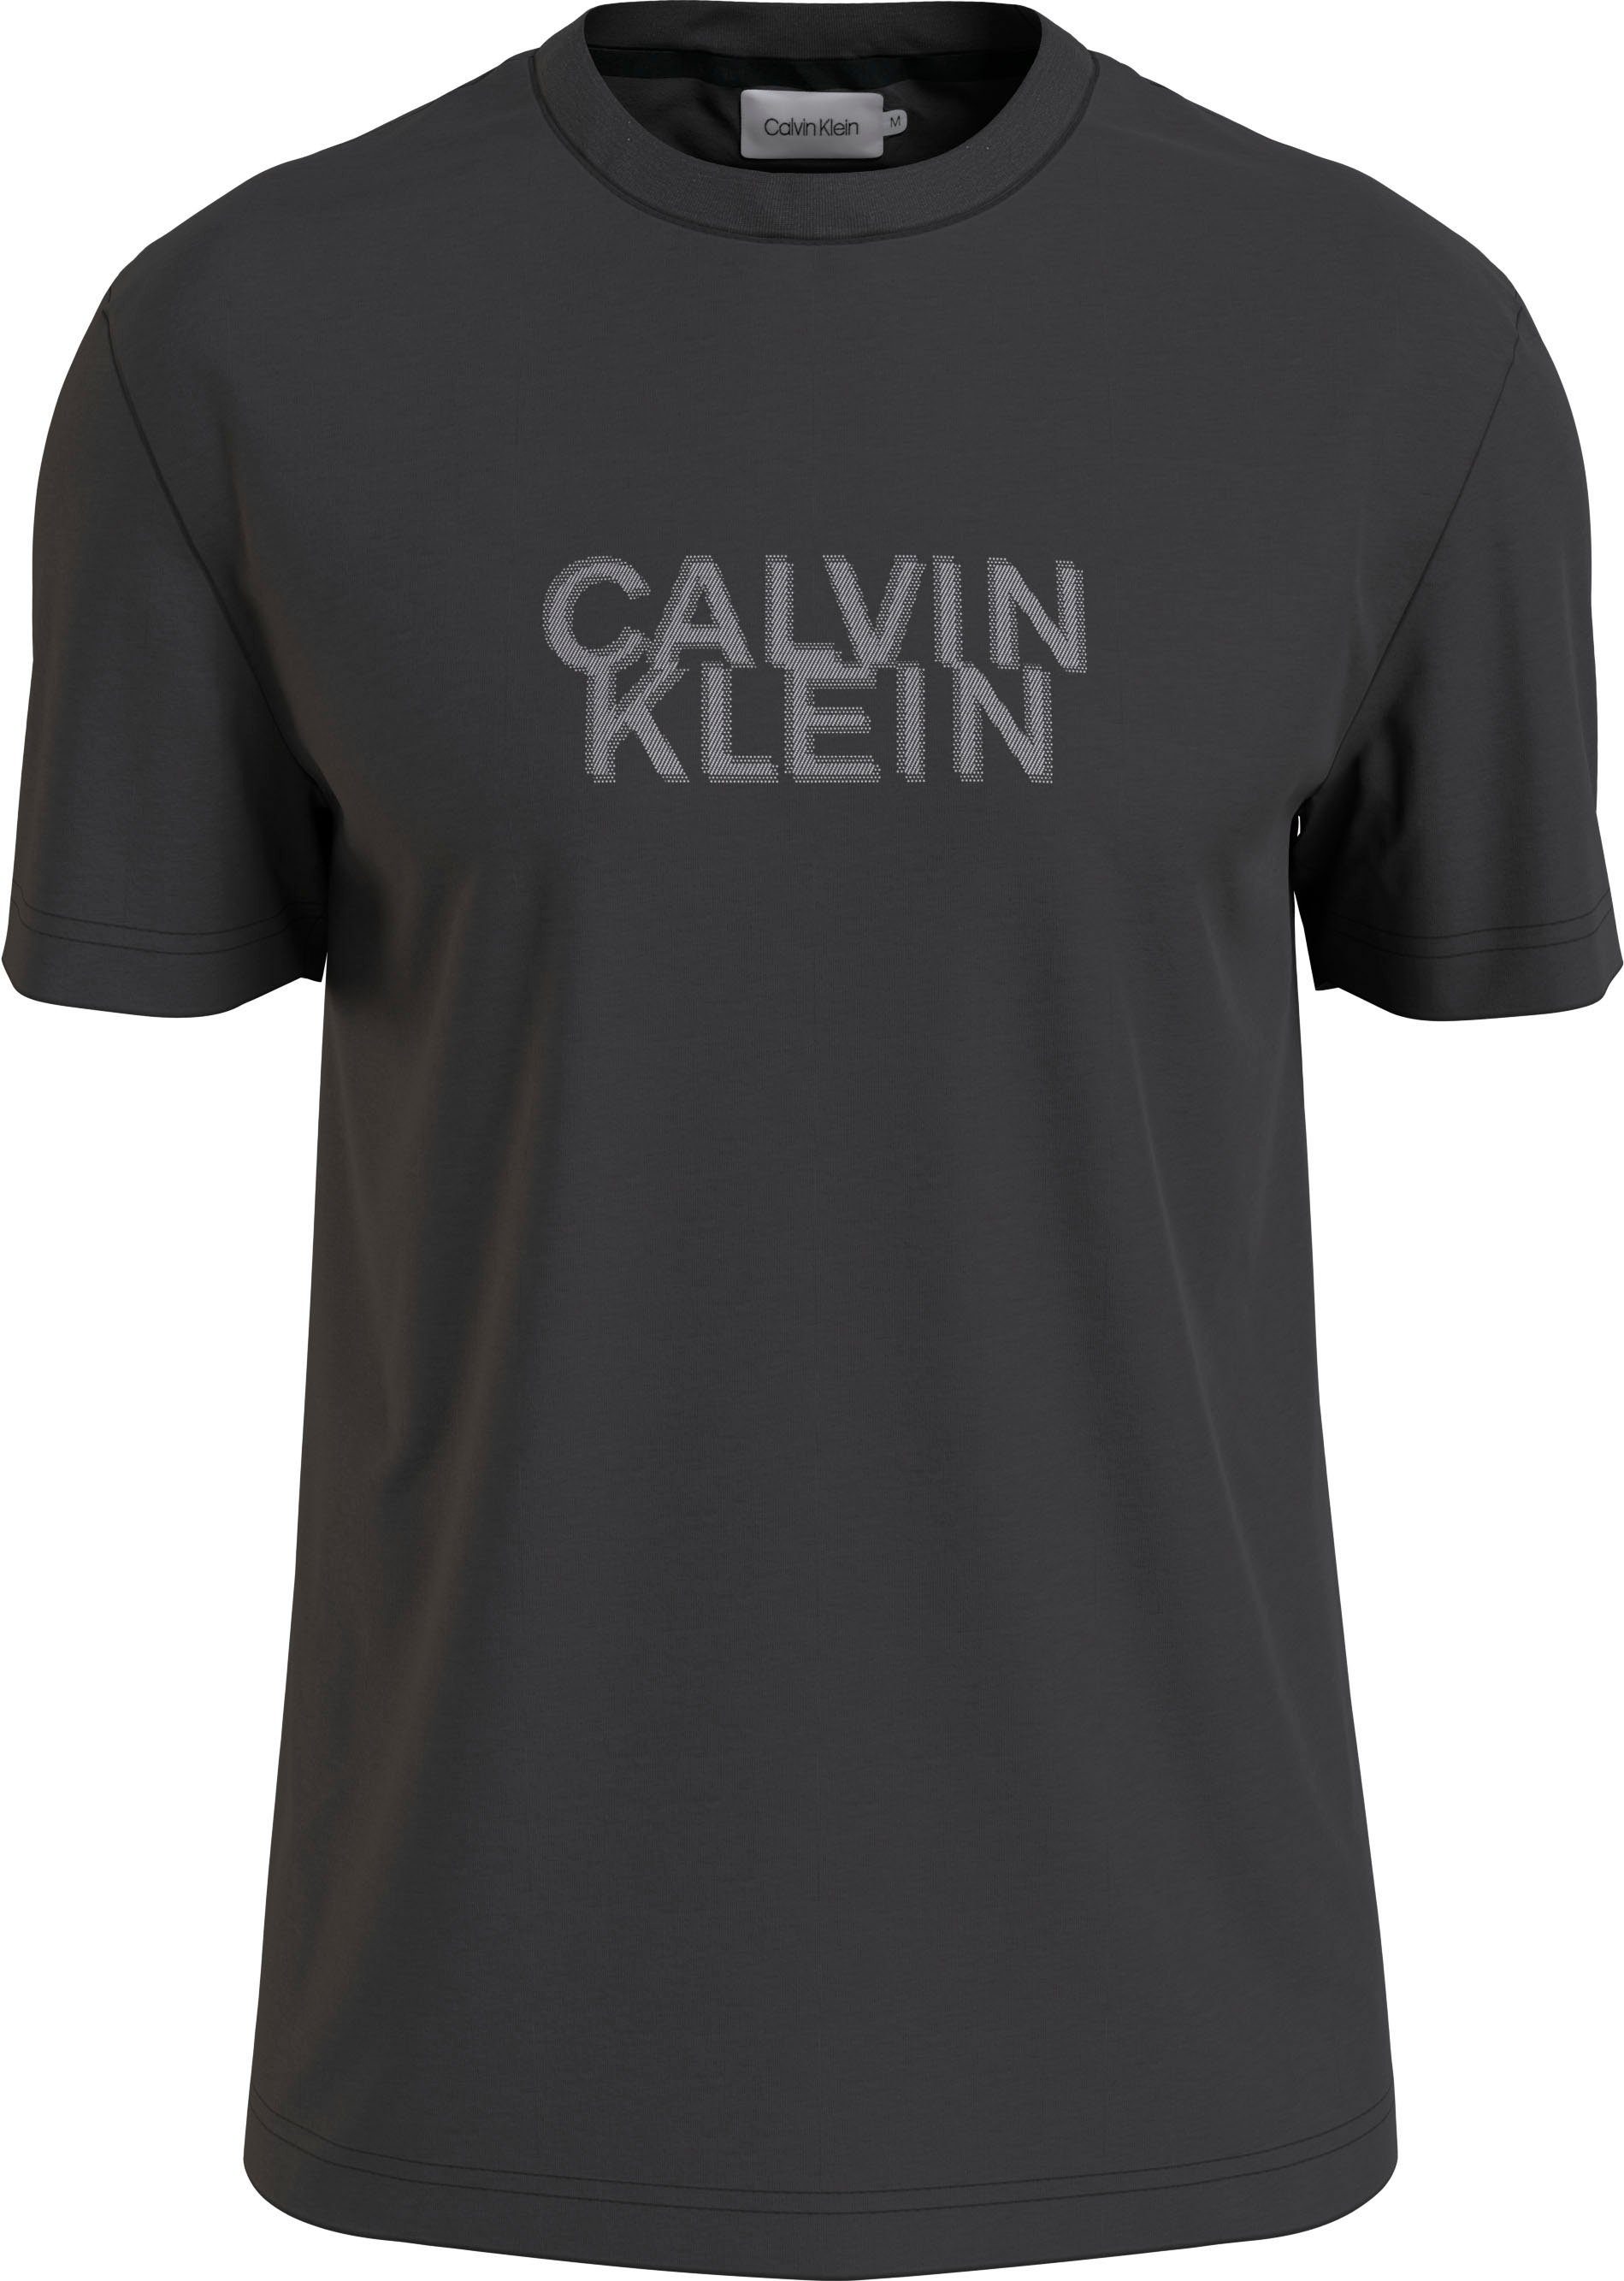 Klein Calvin DISTORTED LOGO T-SHIRT T-Shirt